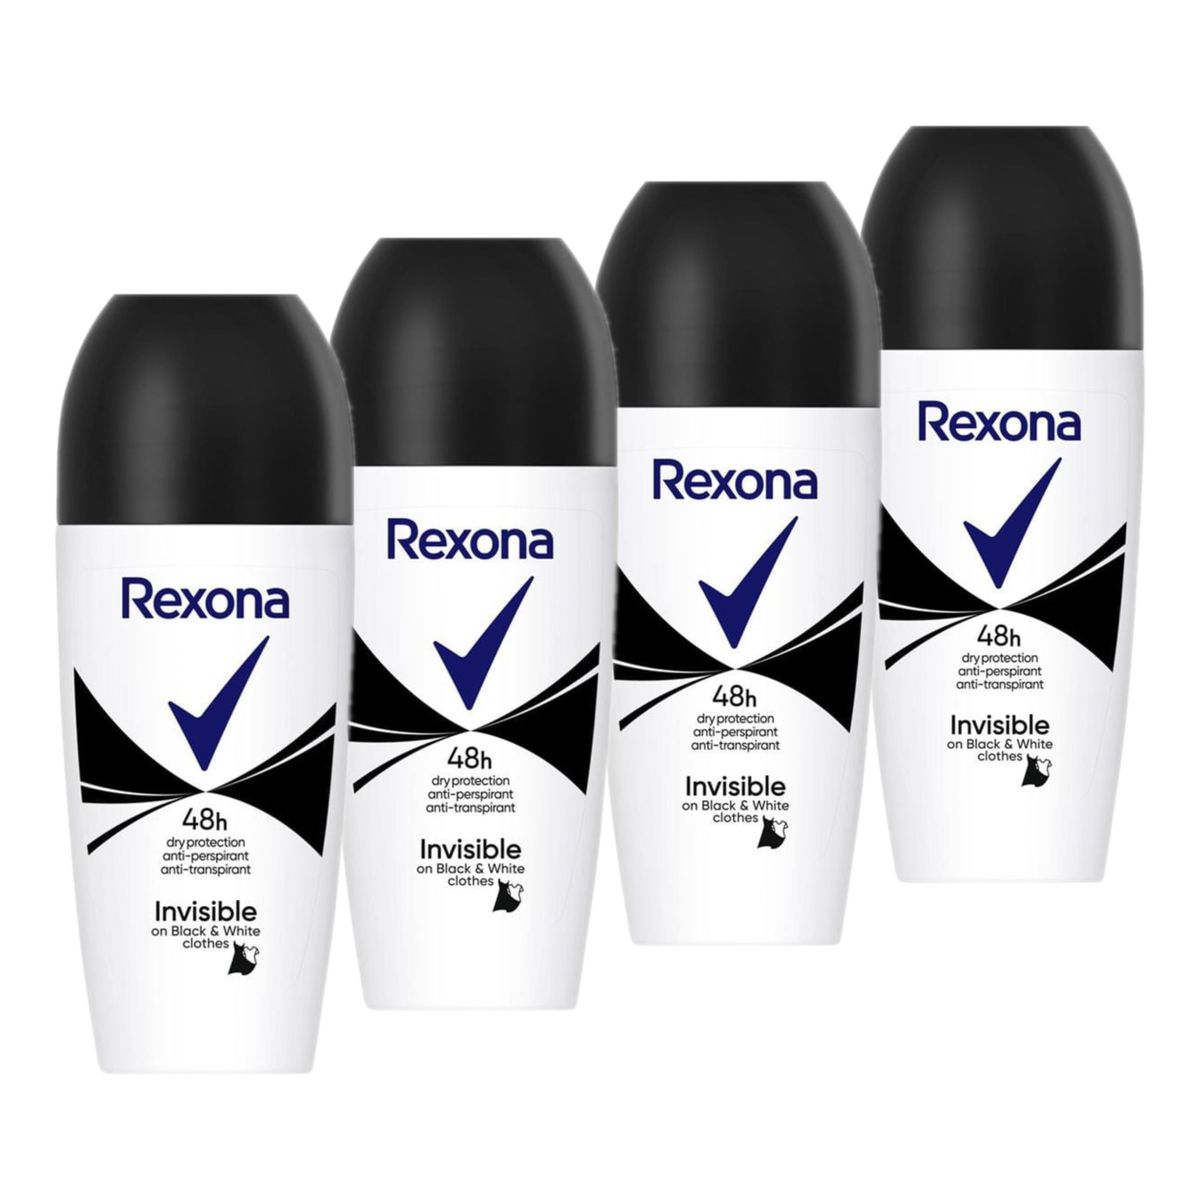 Rexona Invisible on black and white clothes Antyperspirant w kulce dla kobiet 4x50ml